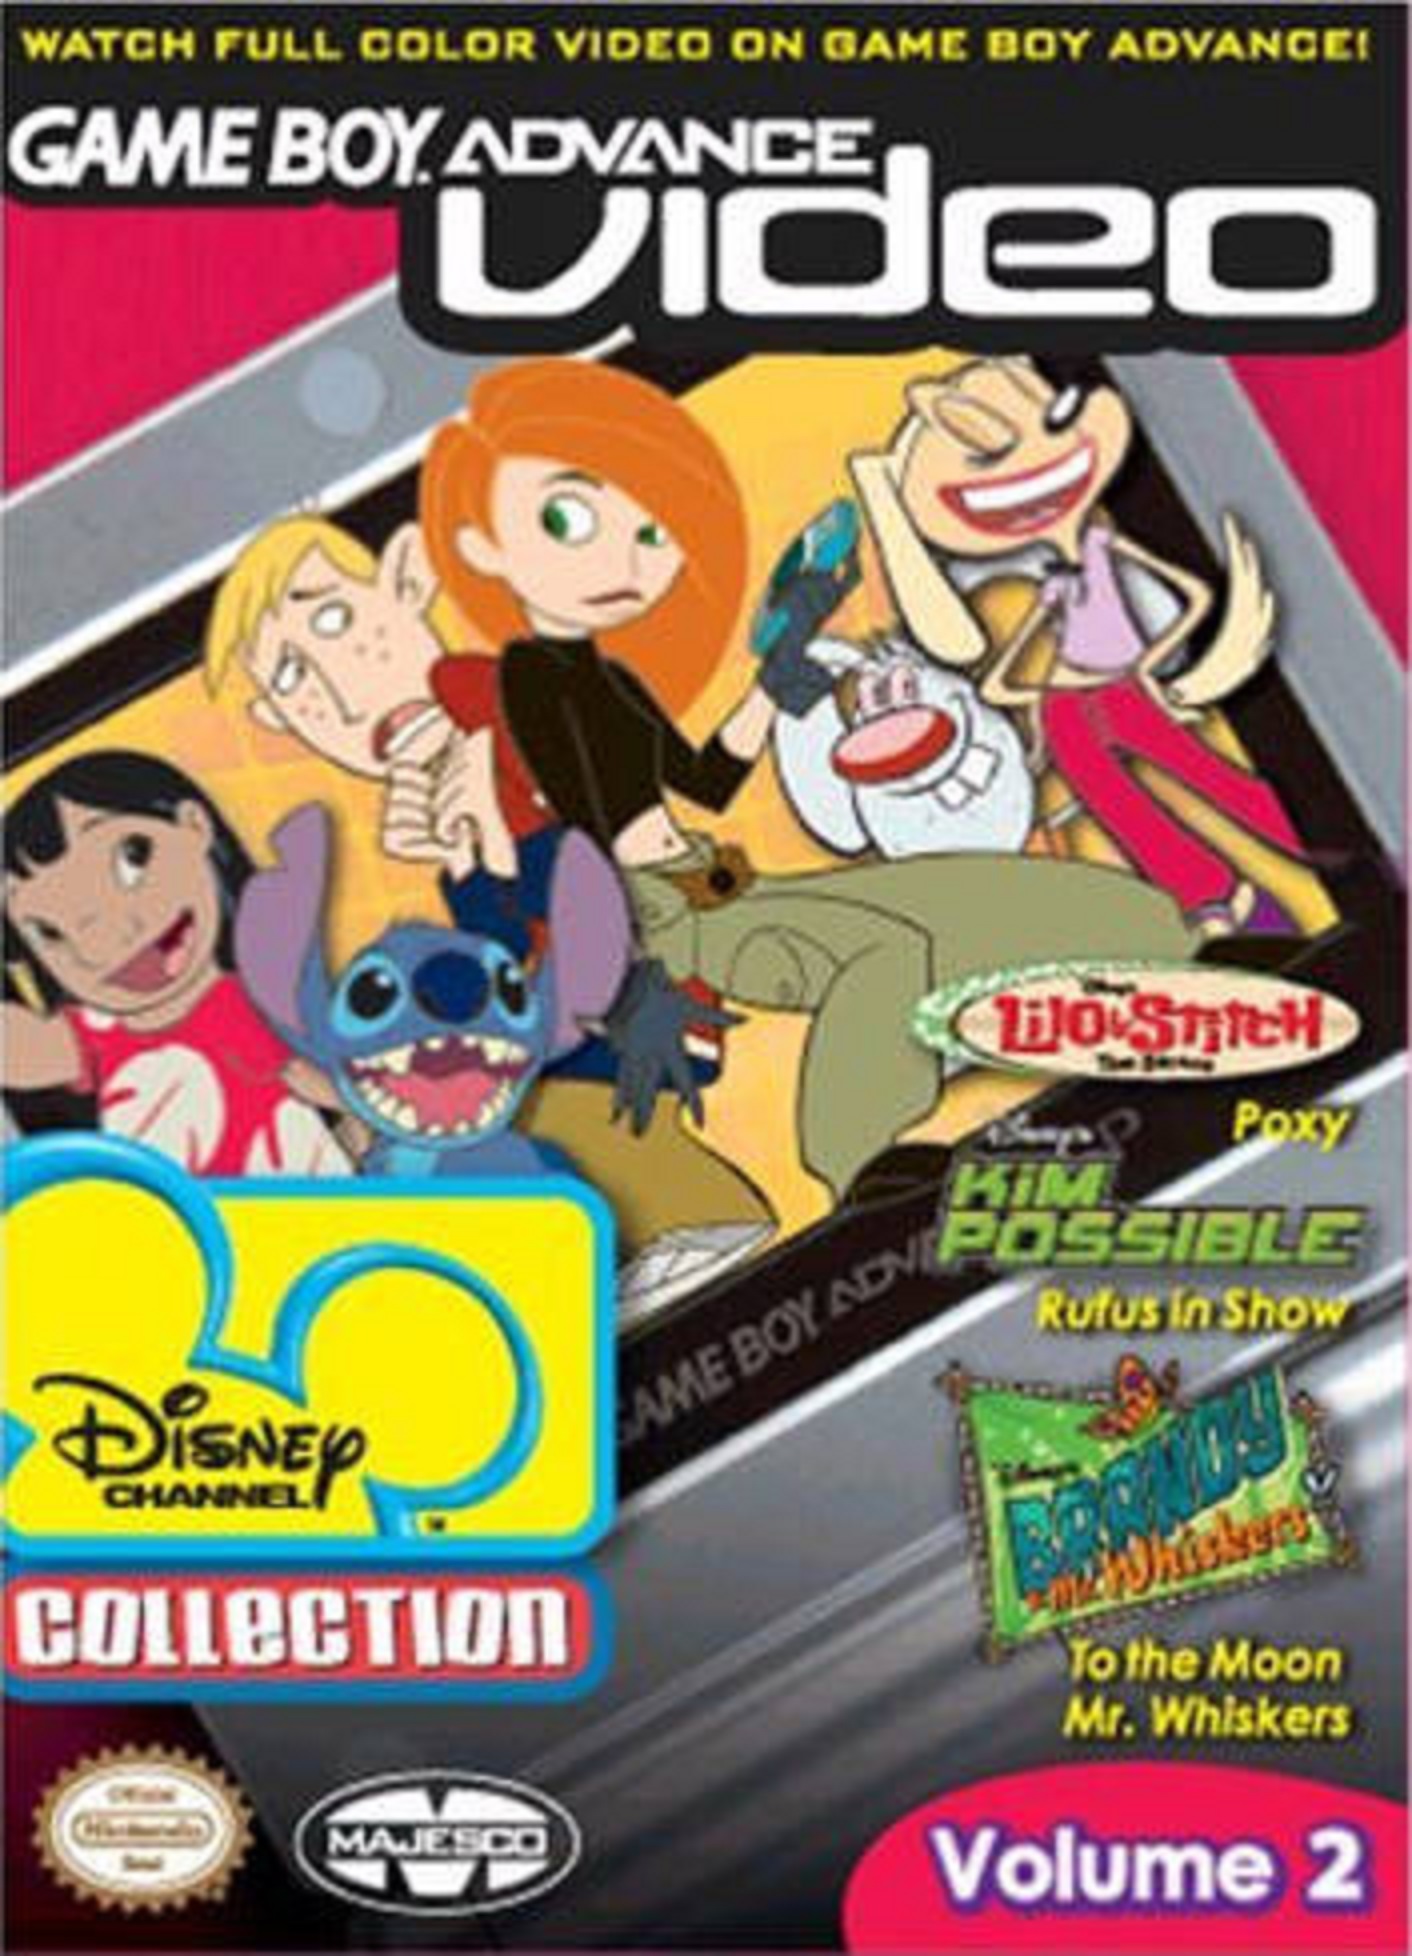 Disney Collection Volume 2